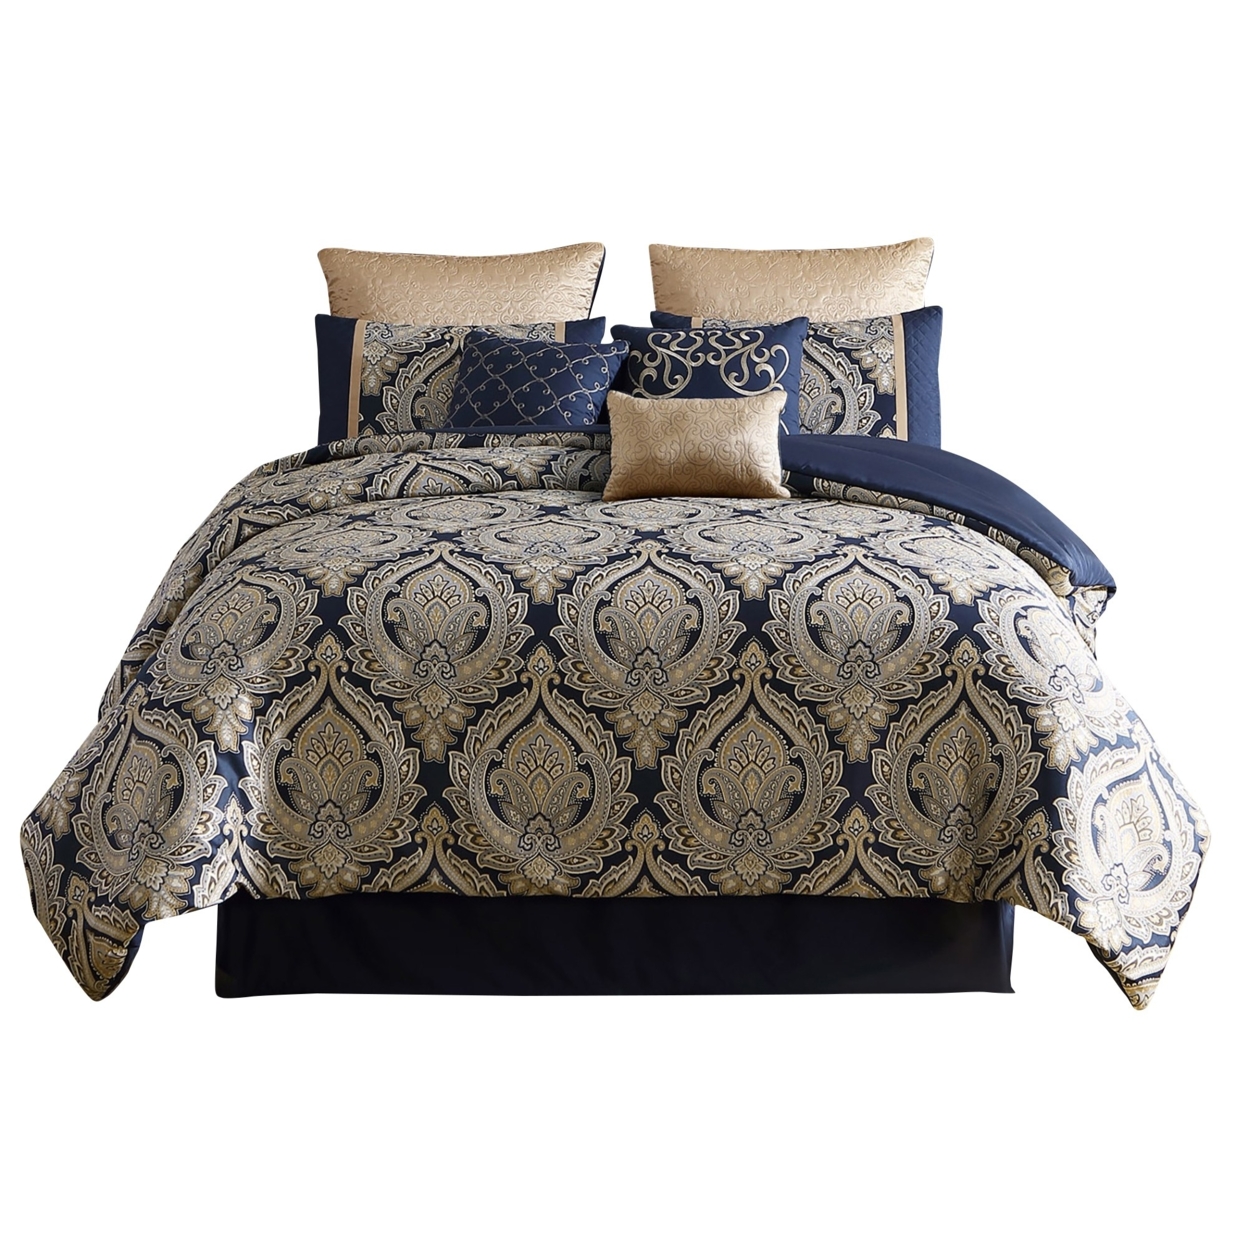 Nova 10 Piece Polyester King Comforter Set, Gold Damask Print, Navy Blue- Saltoro Sherpi